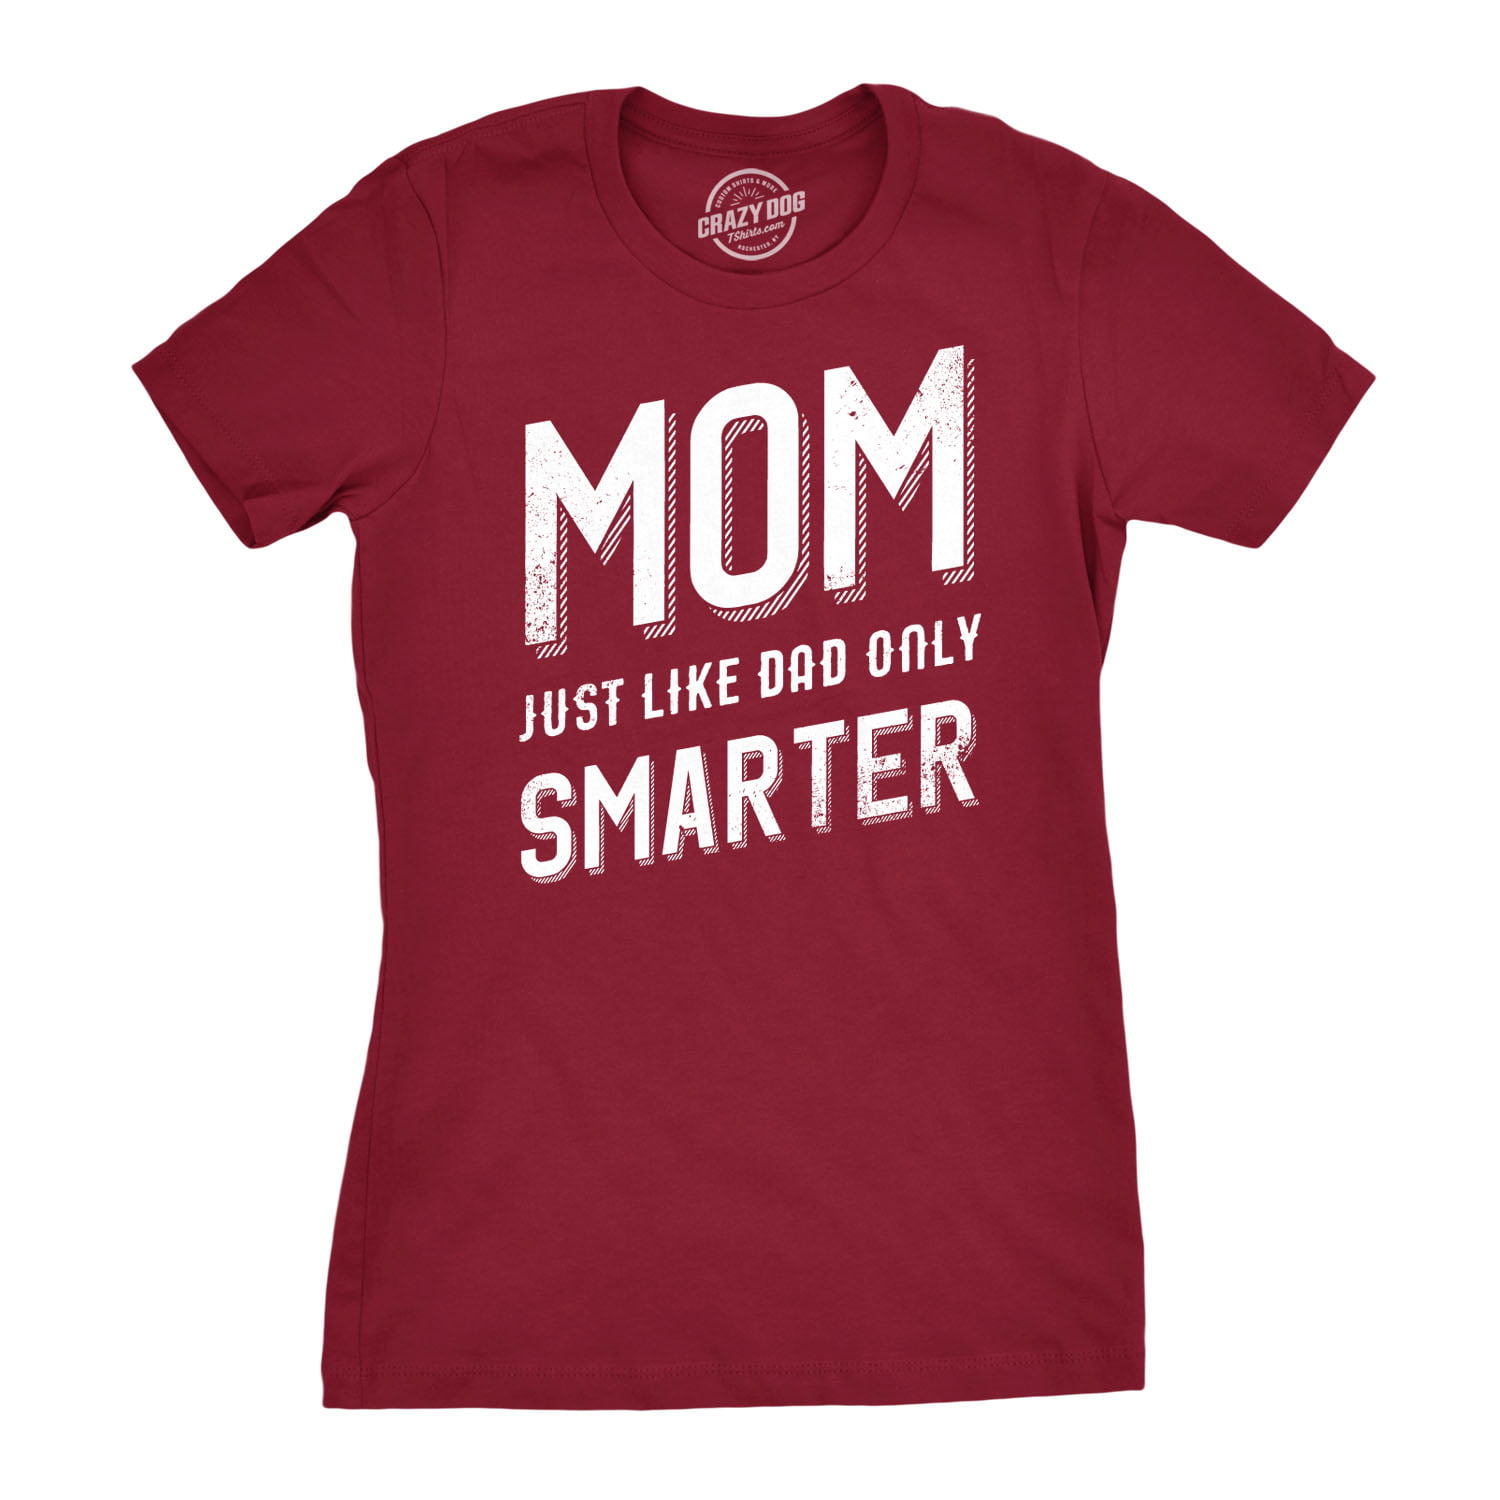 I Love Your Moms Tee Shirt Women Funny Family Love Moms Maglietta